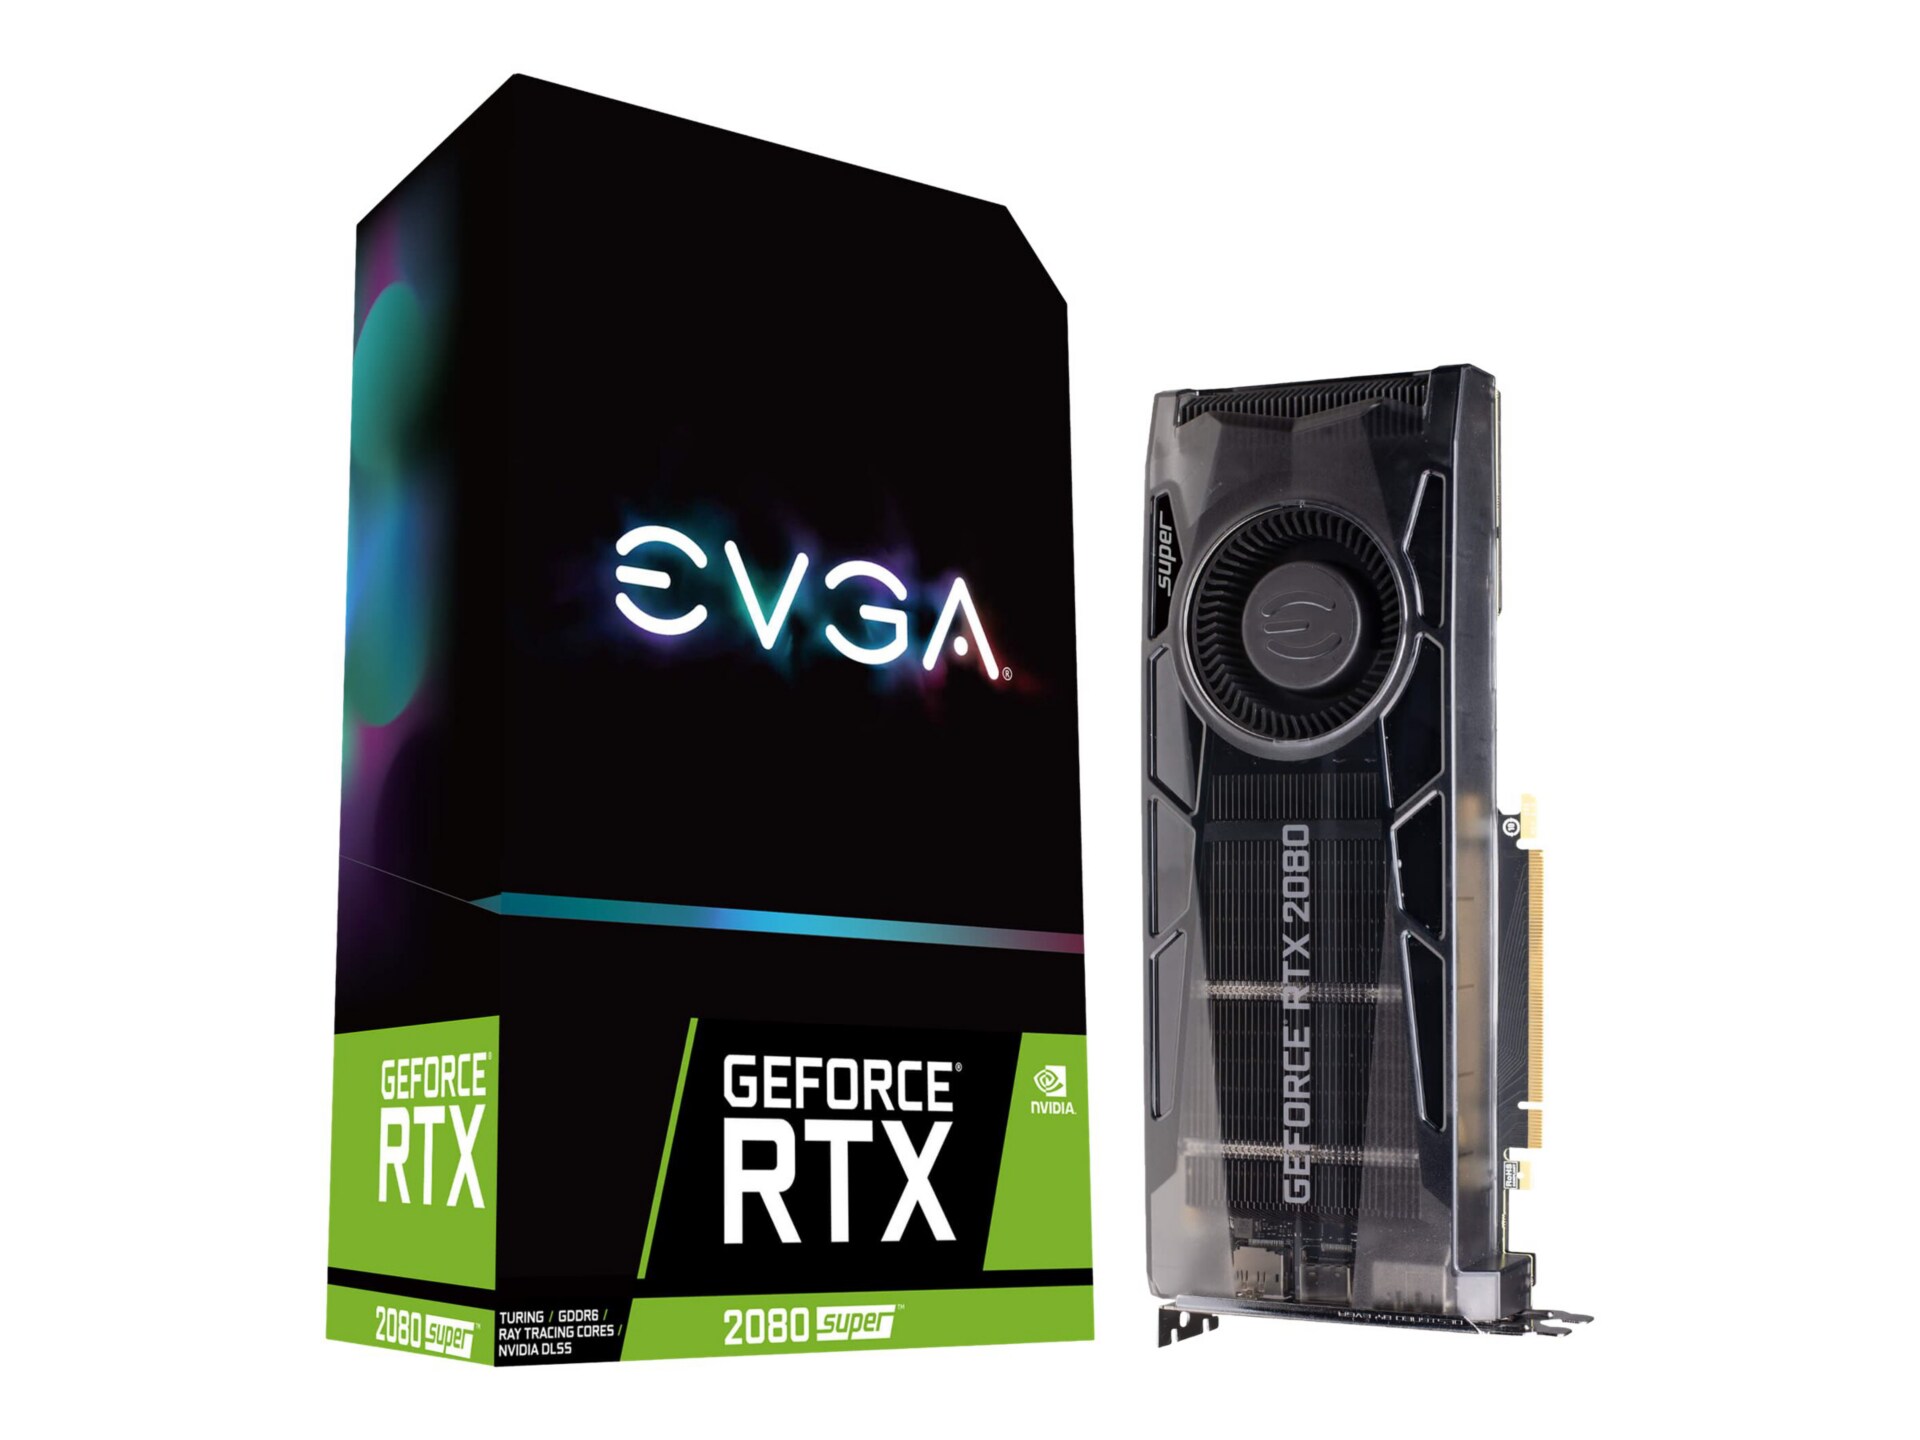 EVGA GeForce RTX 2080 SUPER GAMING - graphics card - GF RTX 2080 SUPER - 8